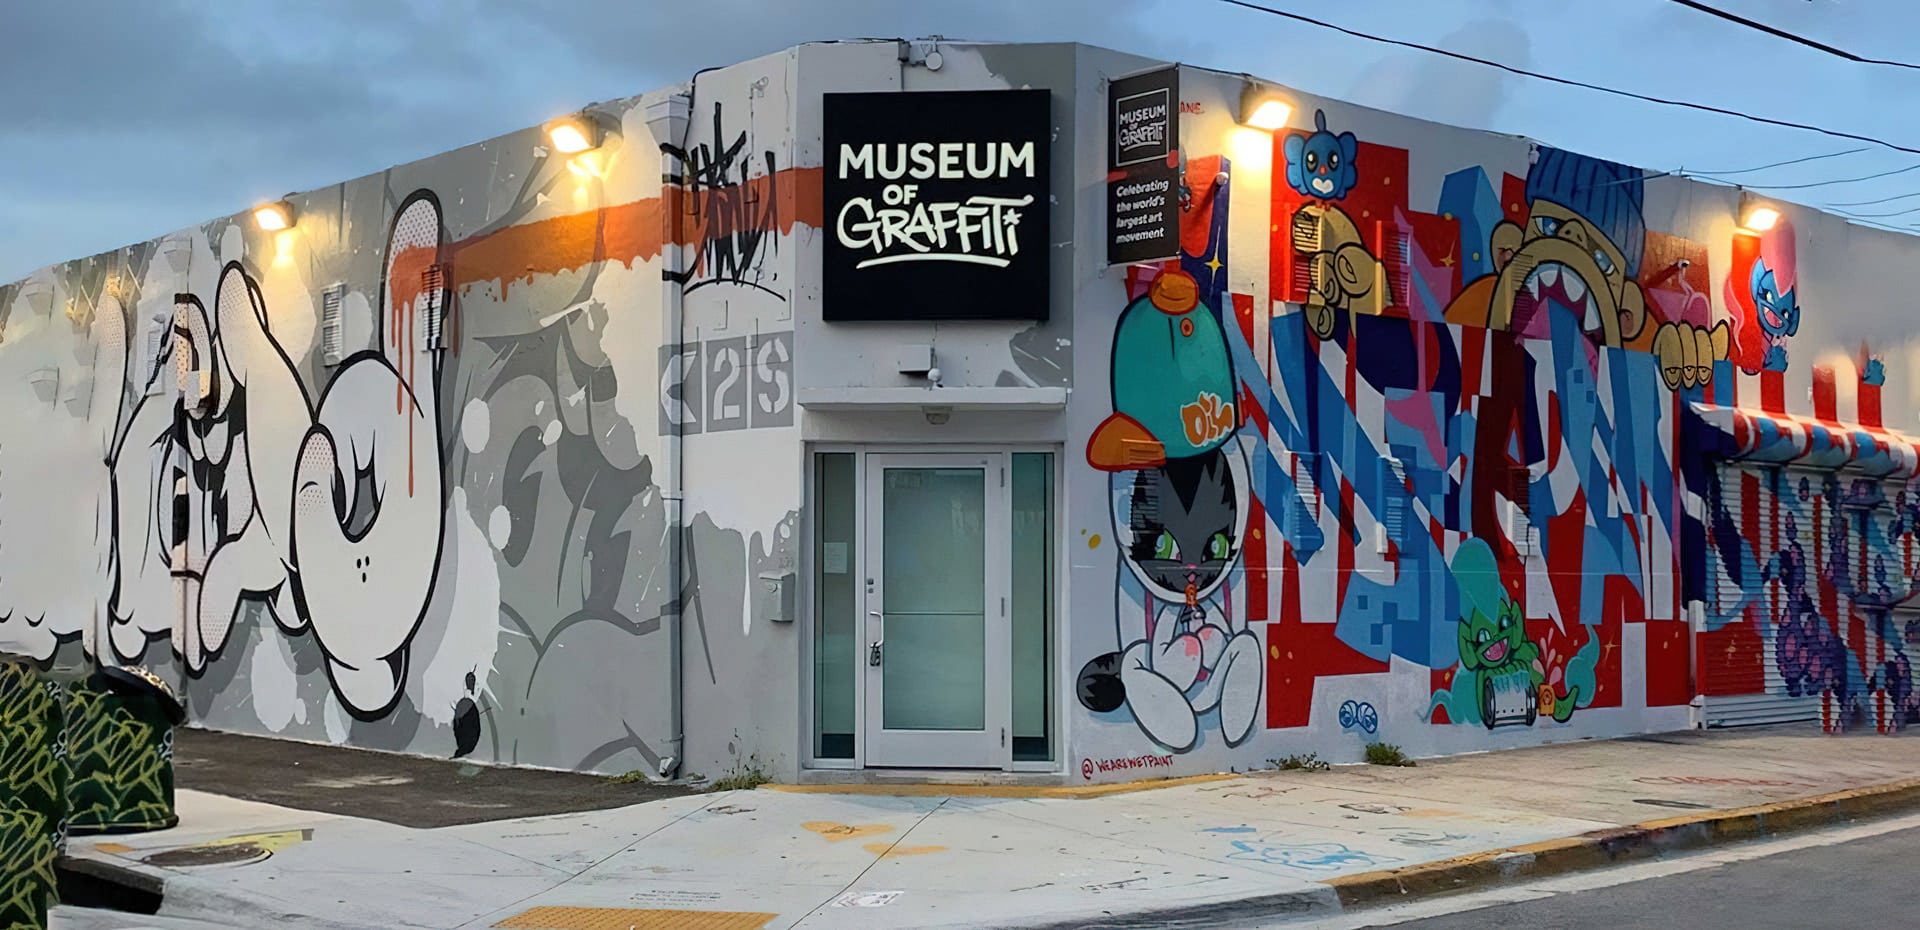 The Museum of Graffiti